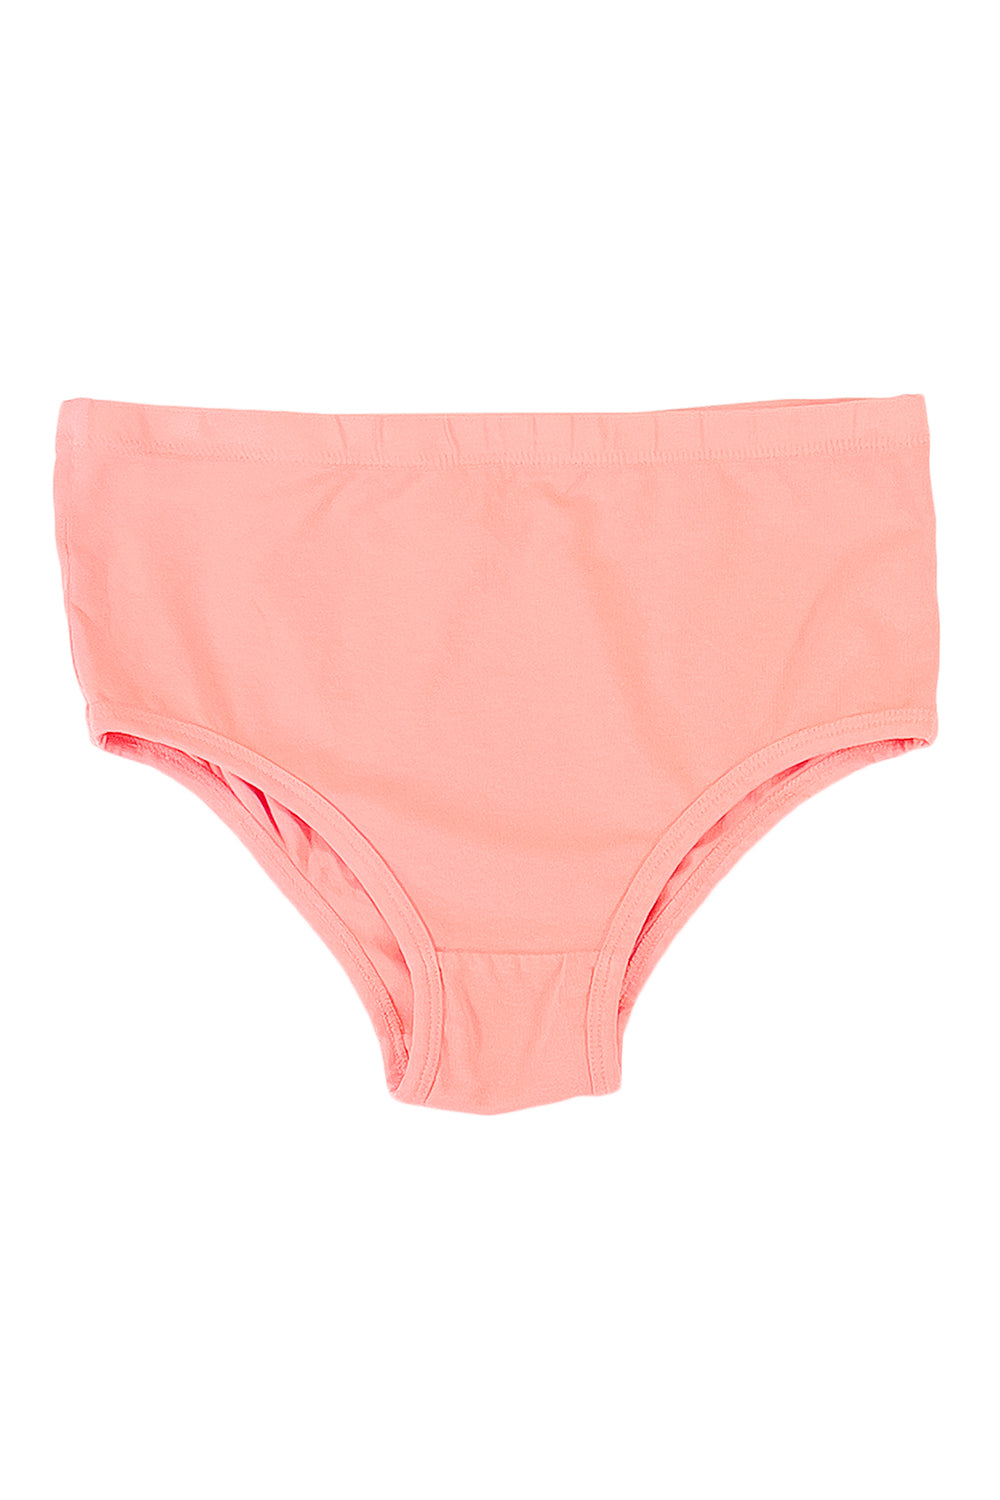 High Waist Brief | Jungmaven Hemp Clothing & Accessories / Color: Pink Salmon